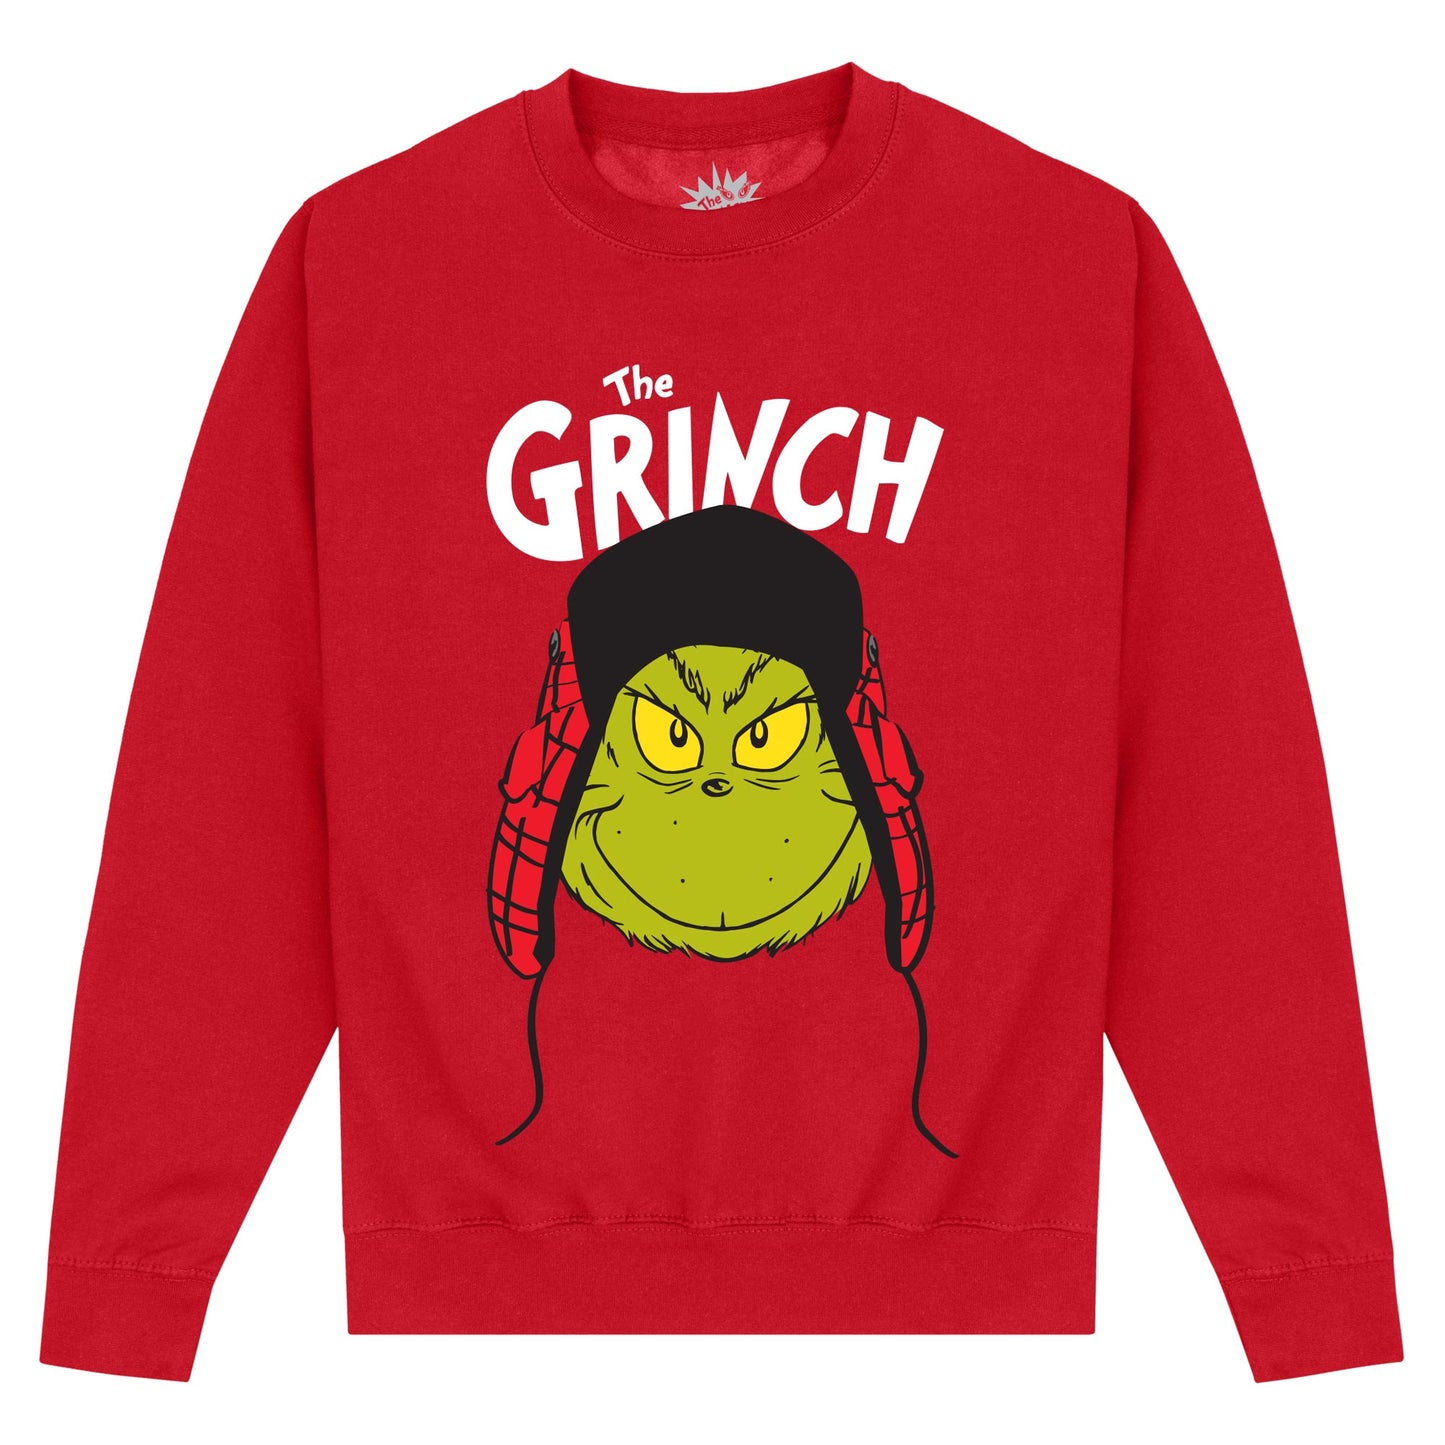 The Grinch Red Sweatshirt